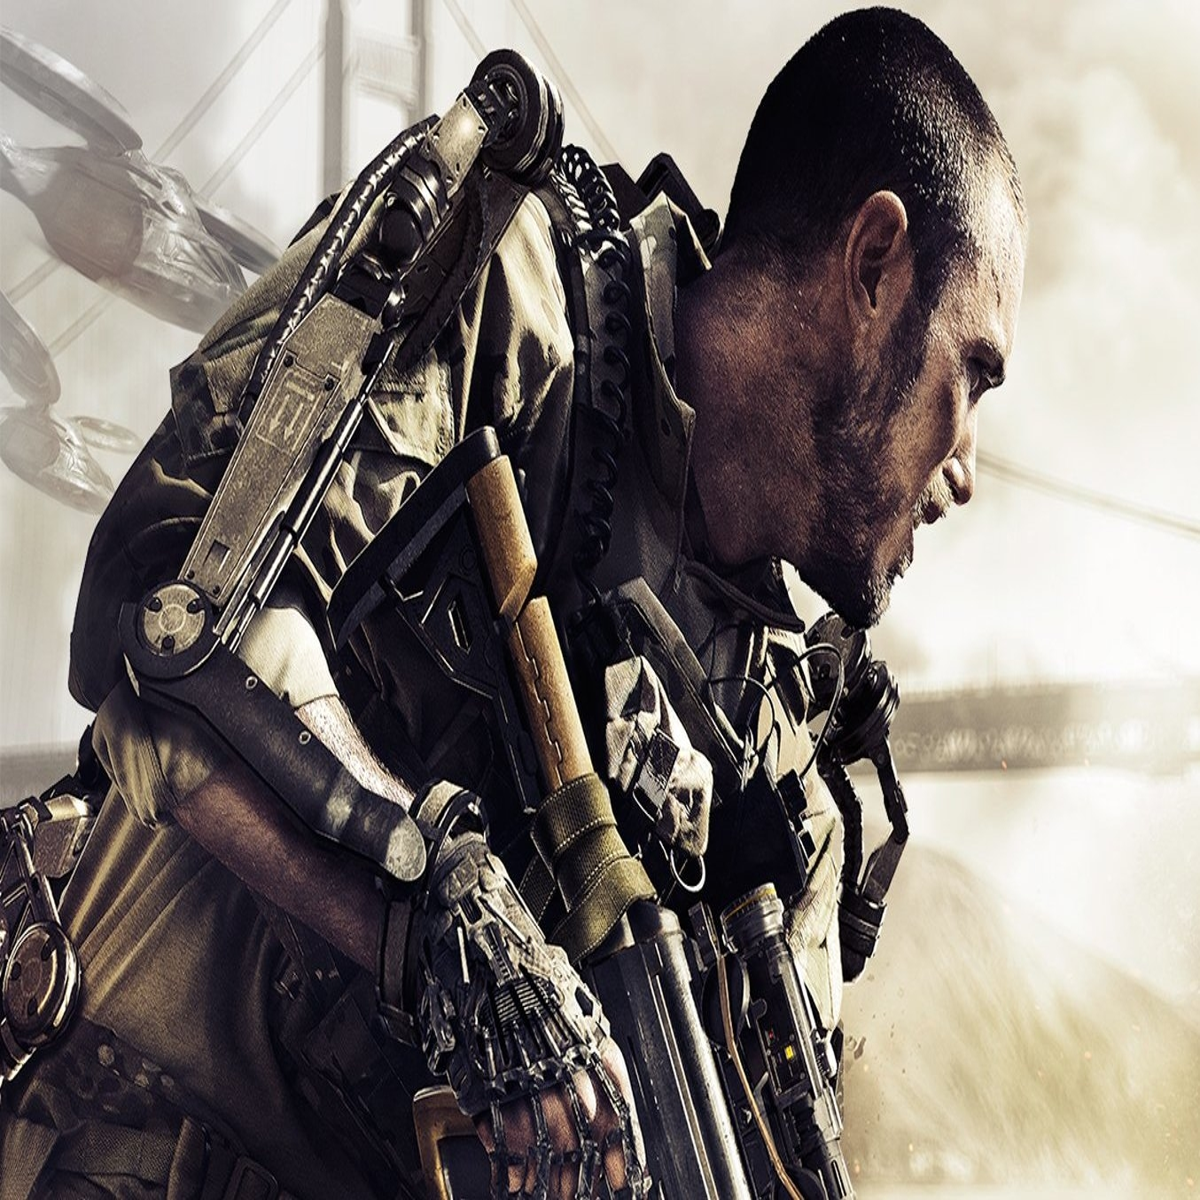 Call of Duty: Advanced Warfare 2 Nearly Happened, Reveals Former Developer